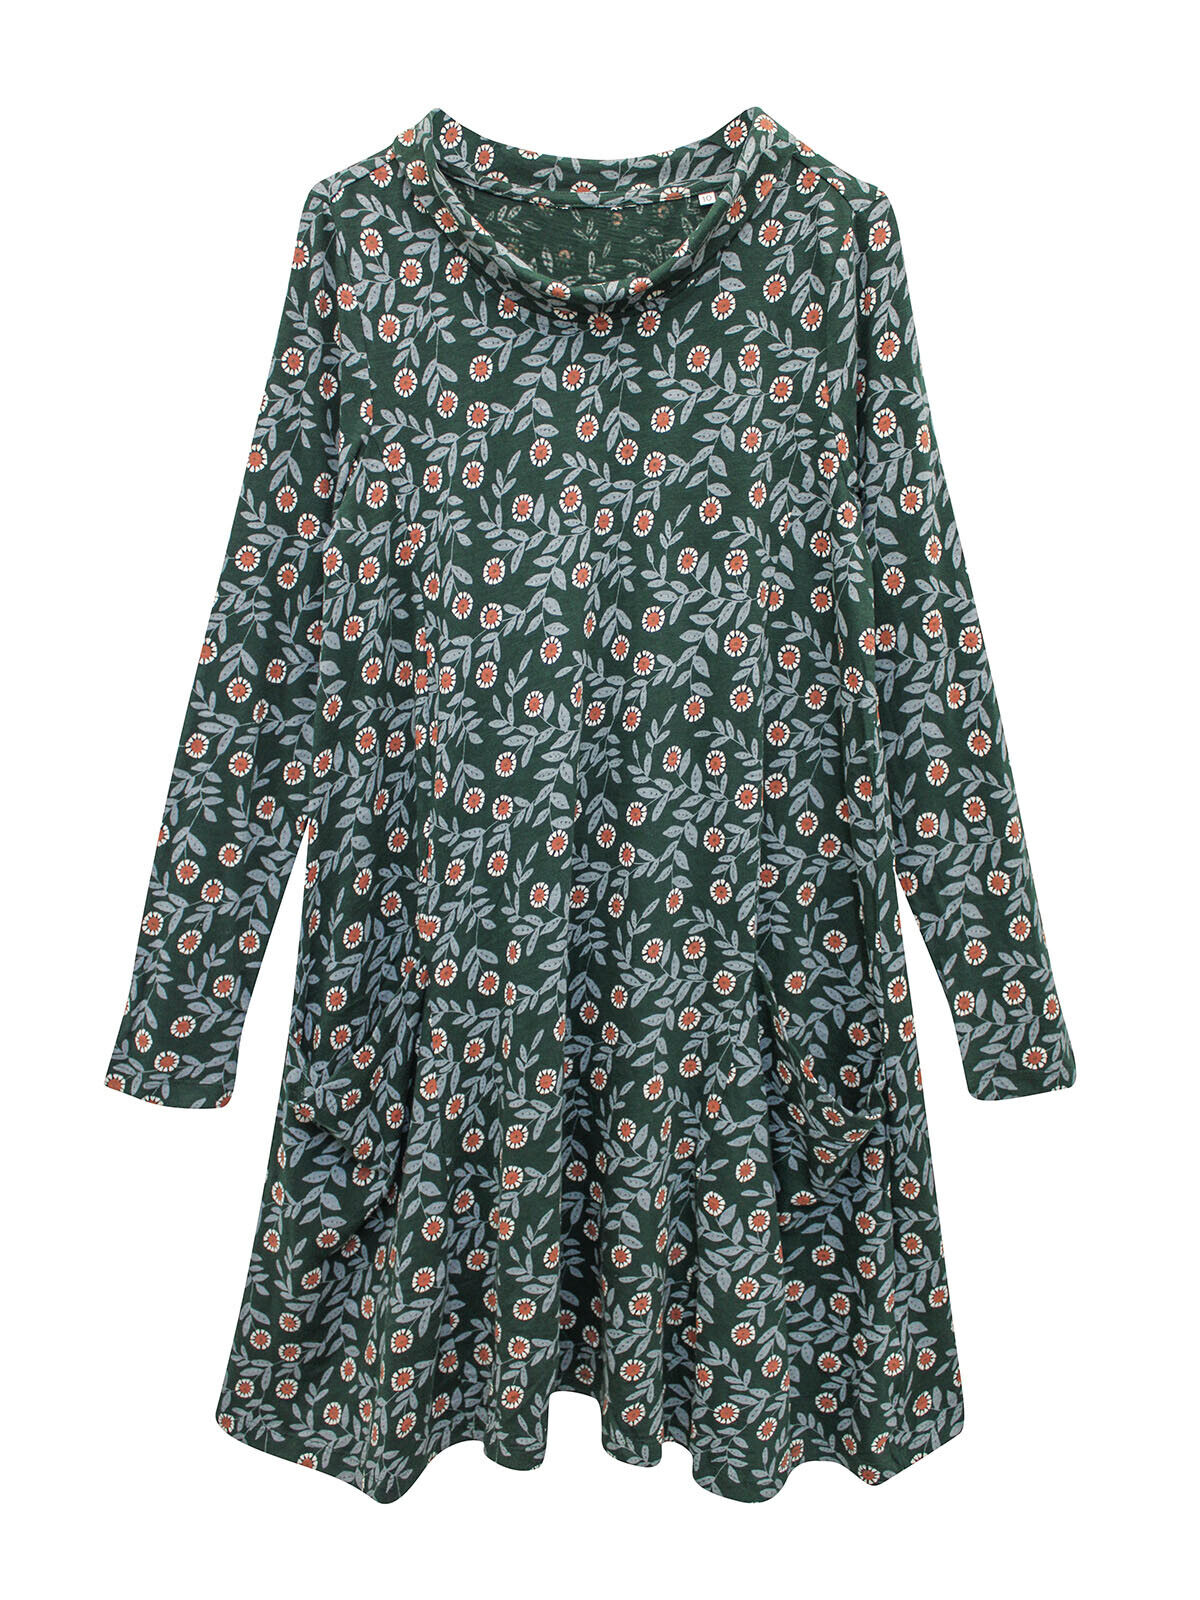 EX Seasalt Green Sea Oak Foliage Bloom Tehid Pockets Dress 12 14 16 20 RRP £55